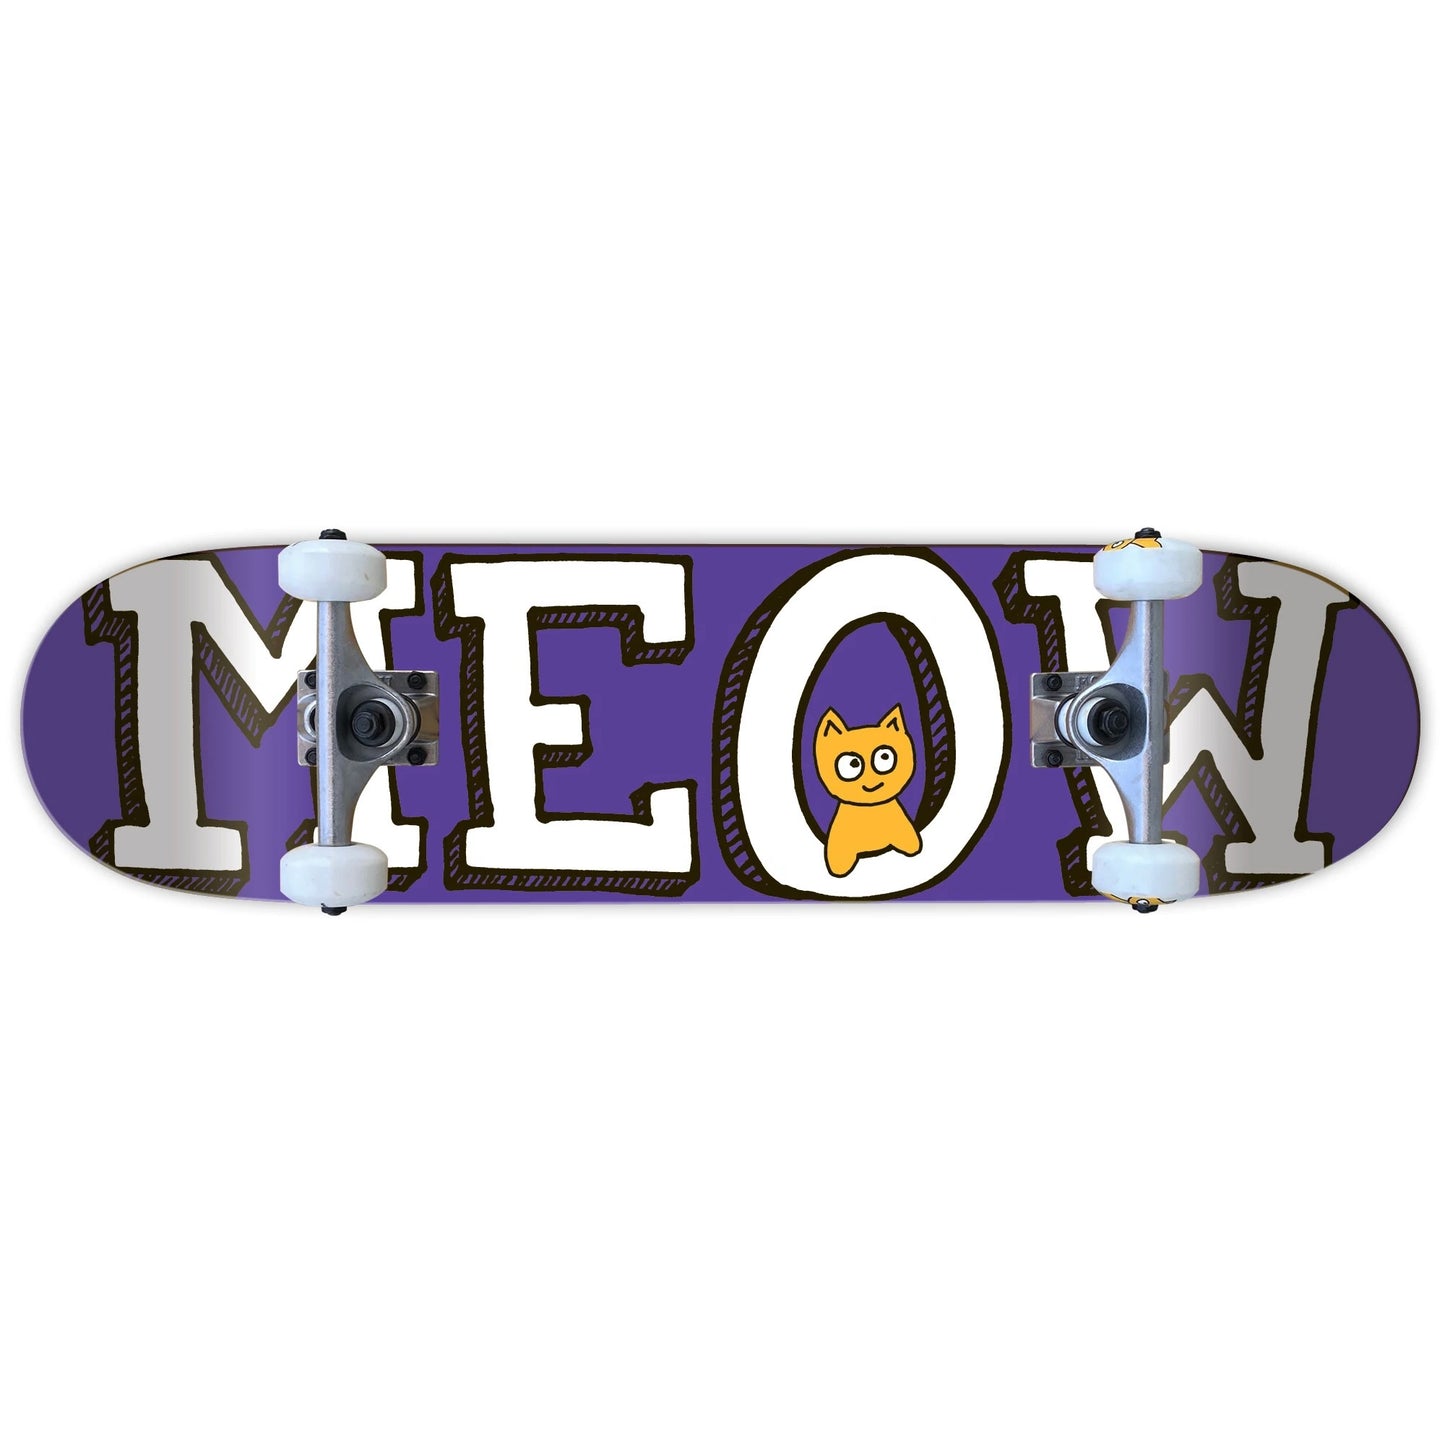 Meow Skateboards Logo Purple  Complete - 8.25"